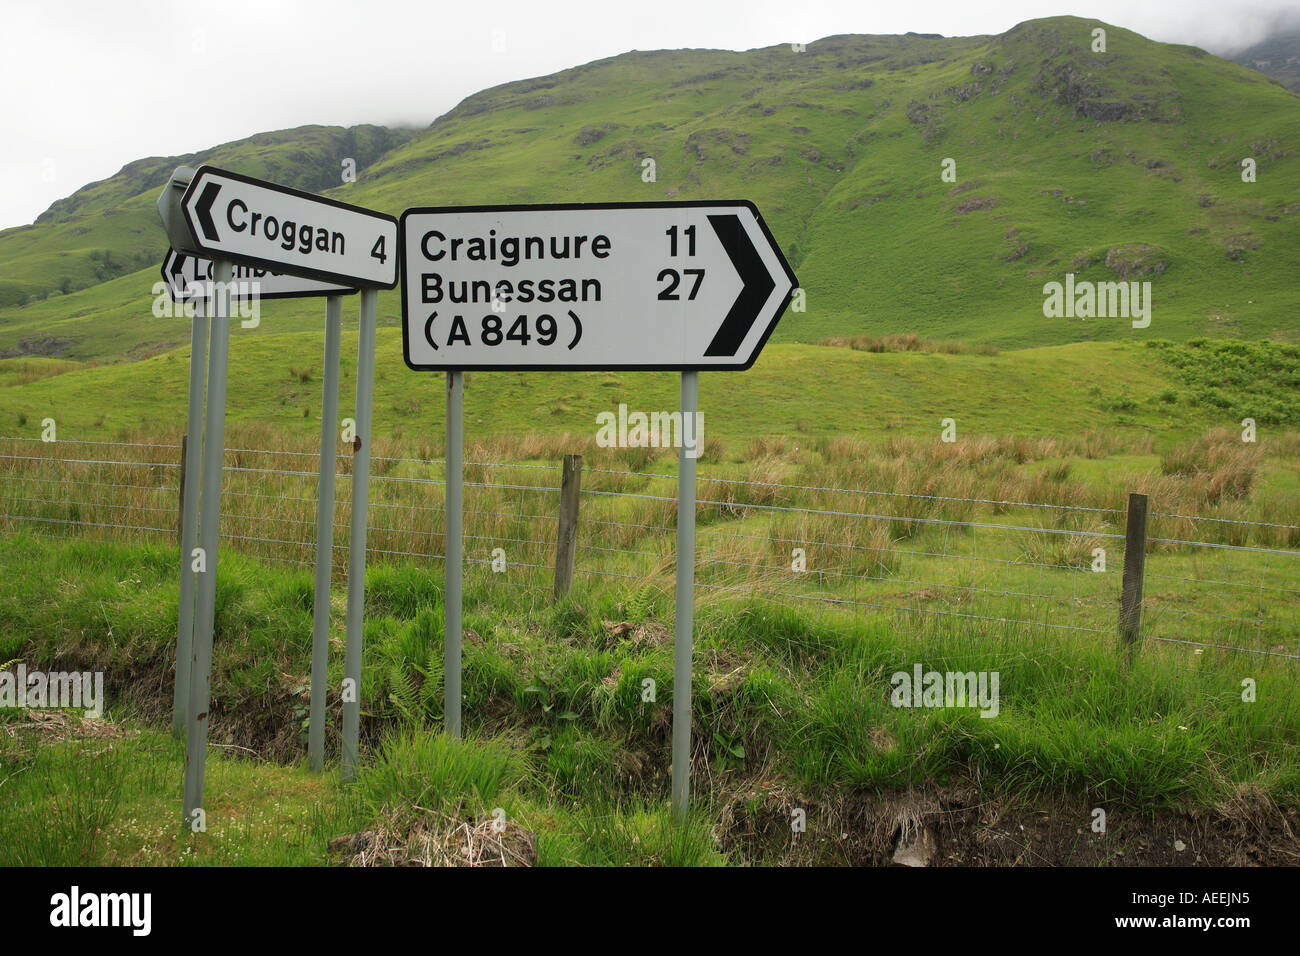 Modern signpost on Mull Scotland Craigure 11 Bunessan 27 Croggan 4 Lochbuie 3 miles Stock Photo